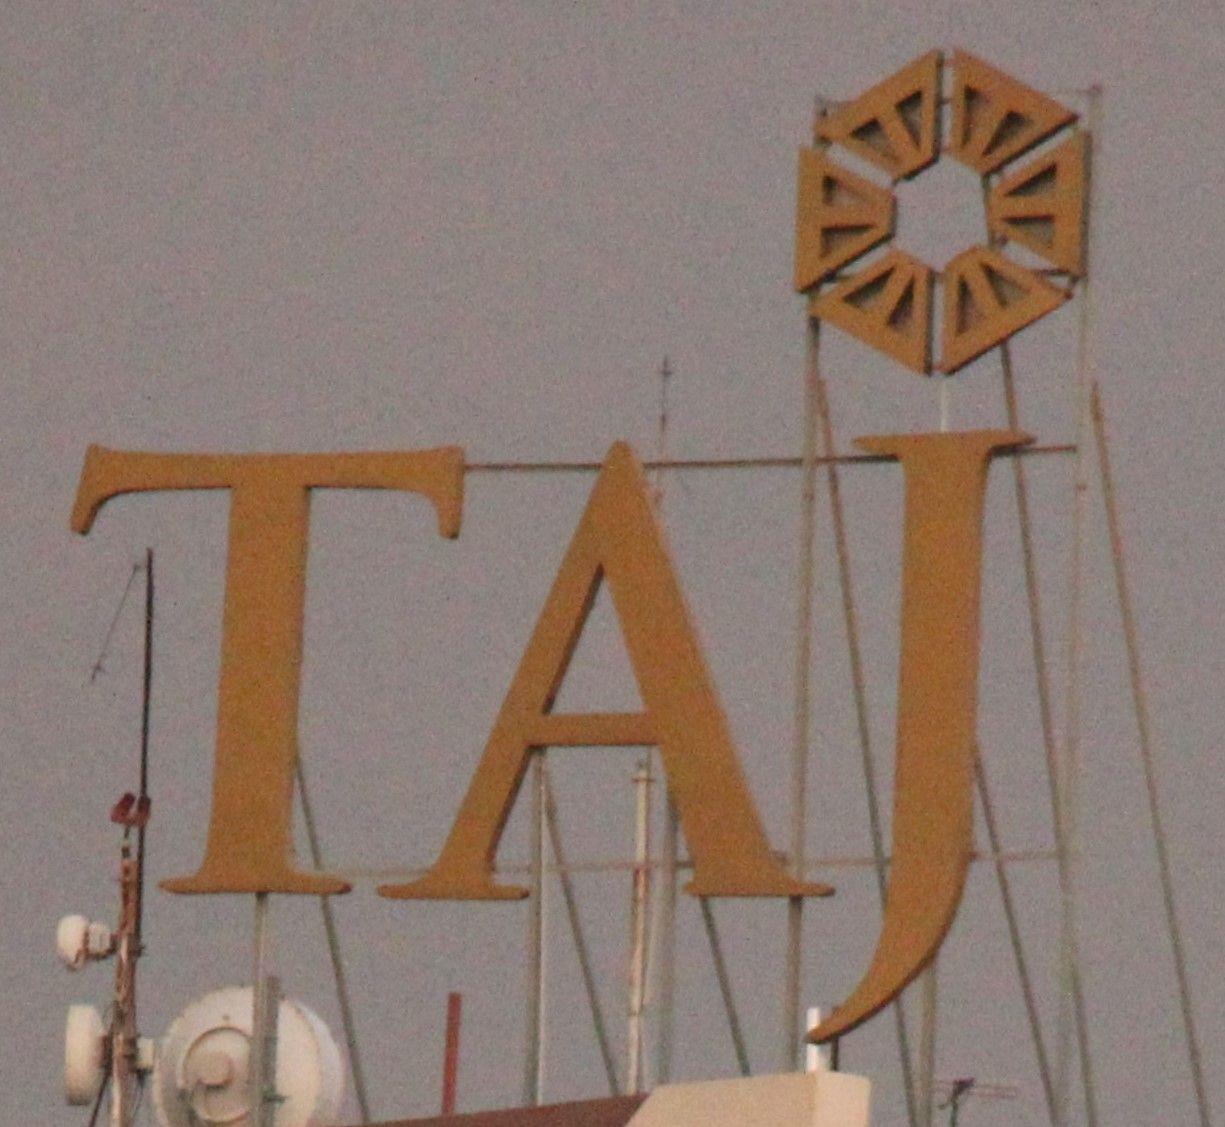 Taj Hotels Logo - File:Taj Hotels Logo.JPG - Wikimedia Commons